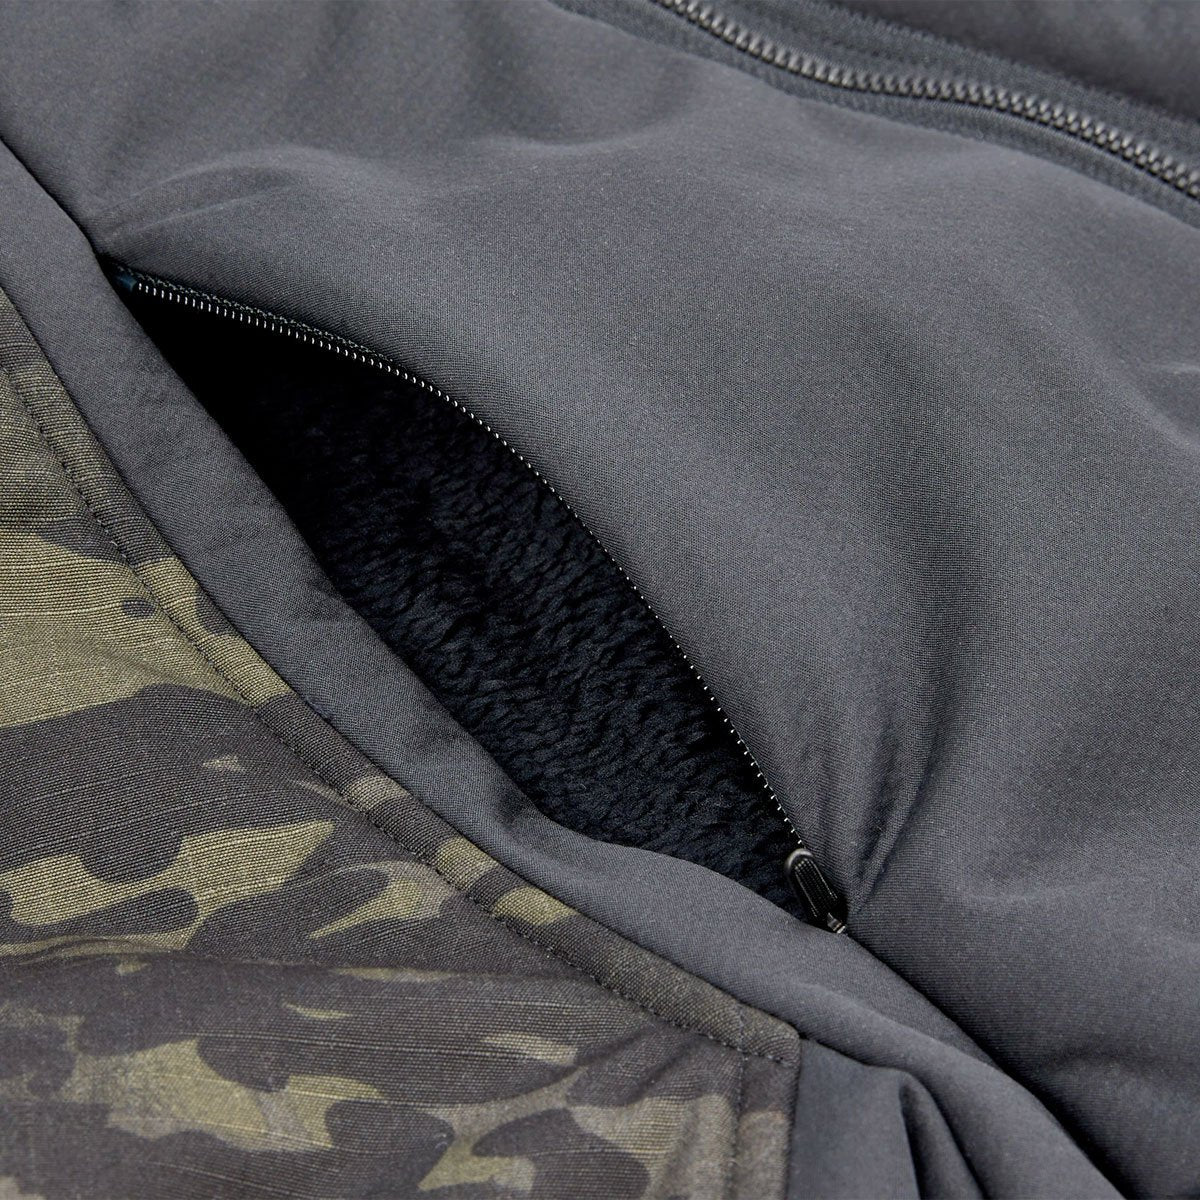 VIKTOS Bersherken MC Jacket Multicam Black Outerwear VIKTOS Tactical Gear Supplier Tactical Distributors Australia